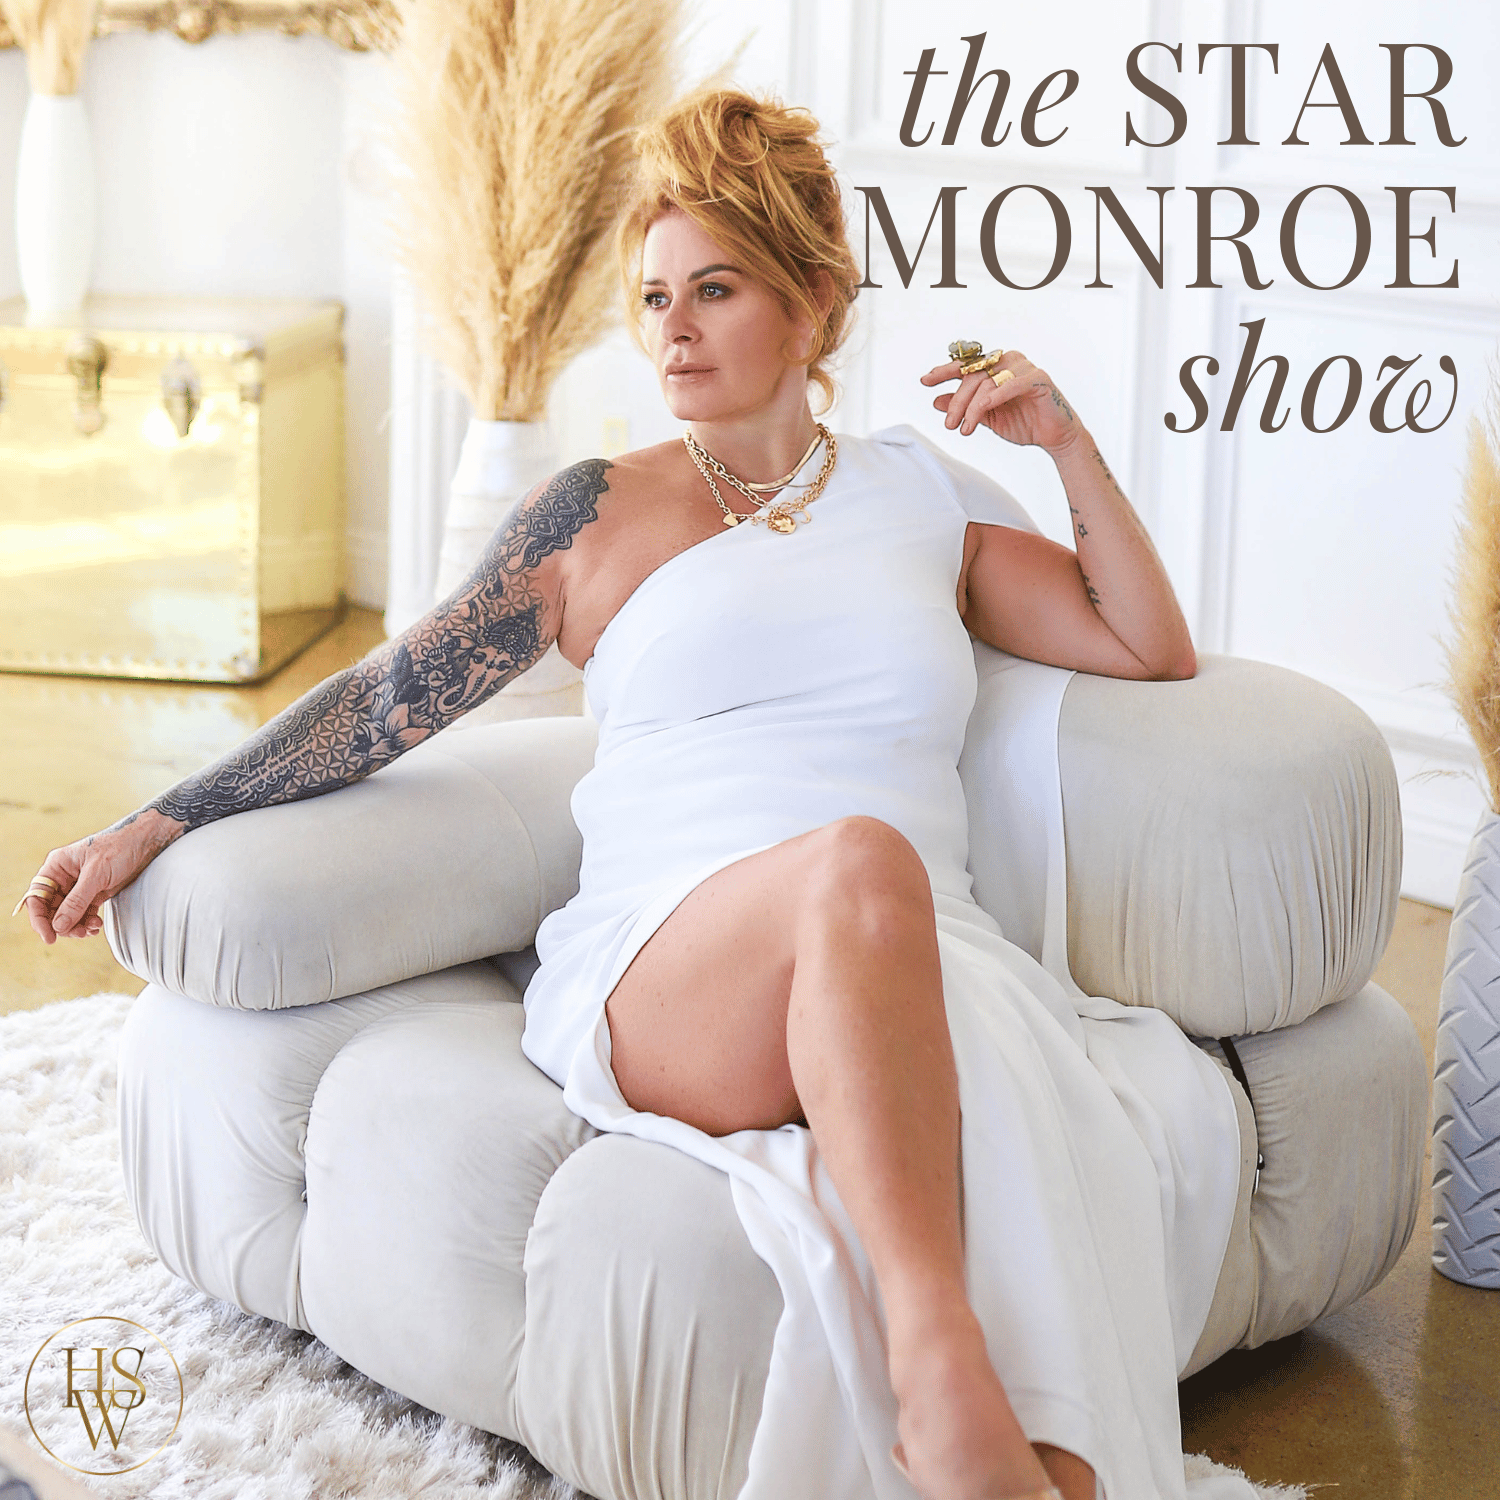 The Star Monroe Show